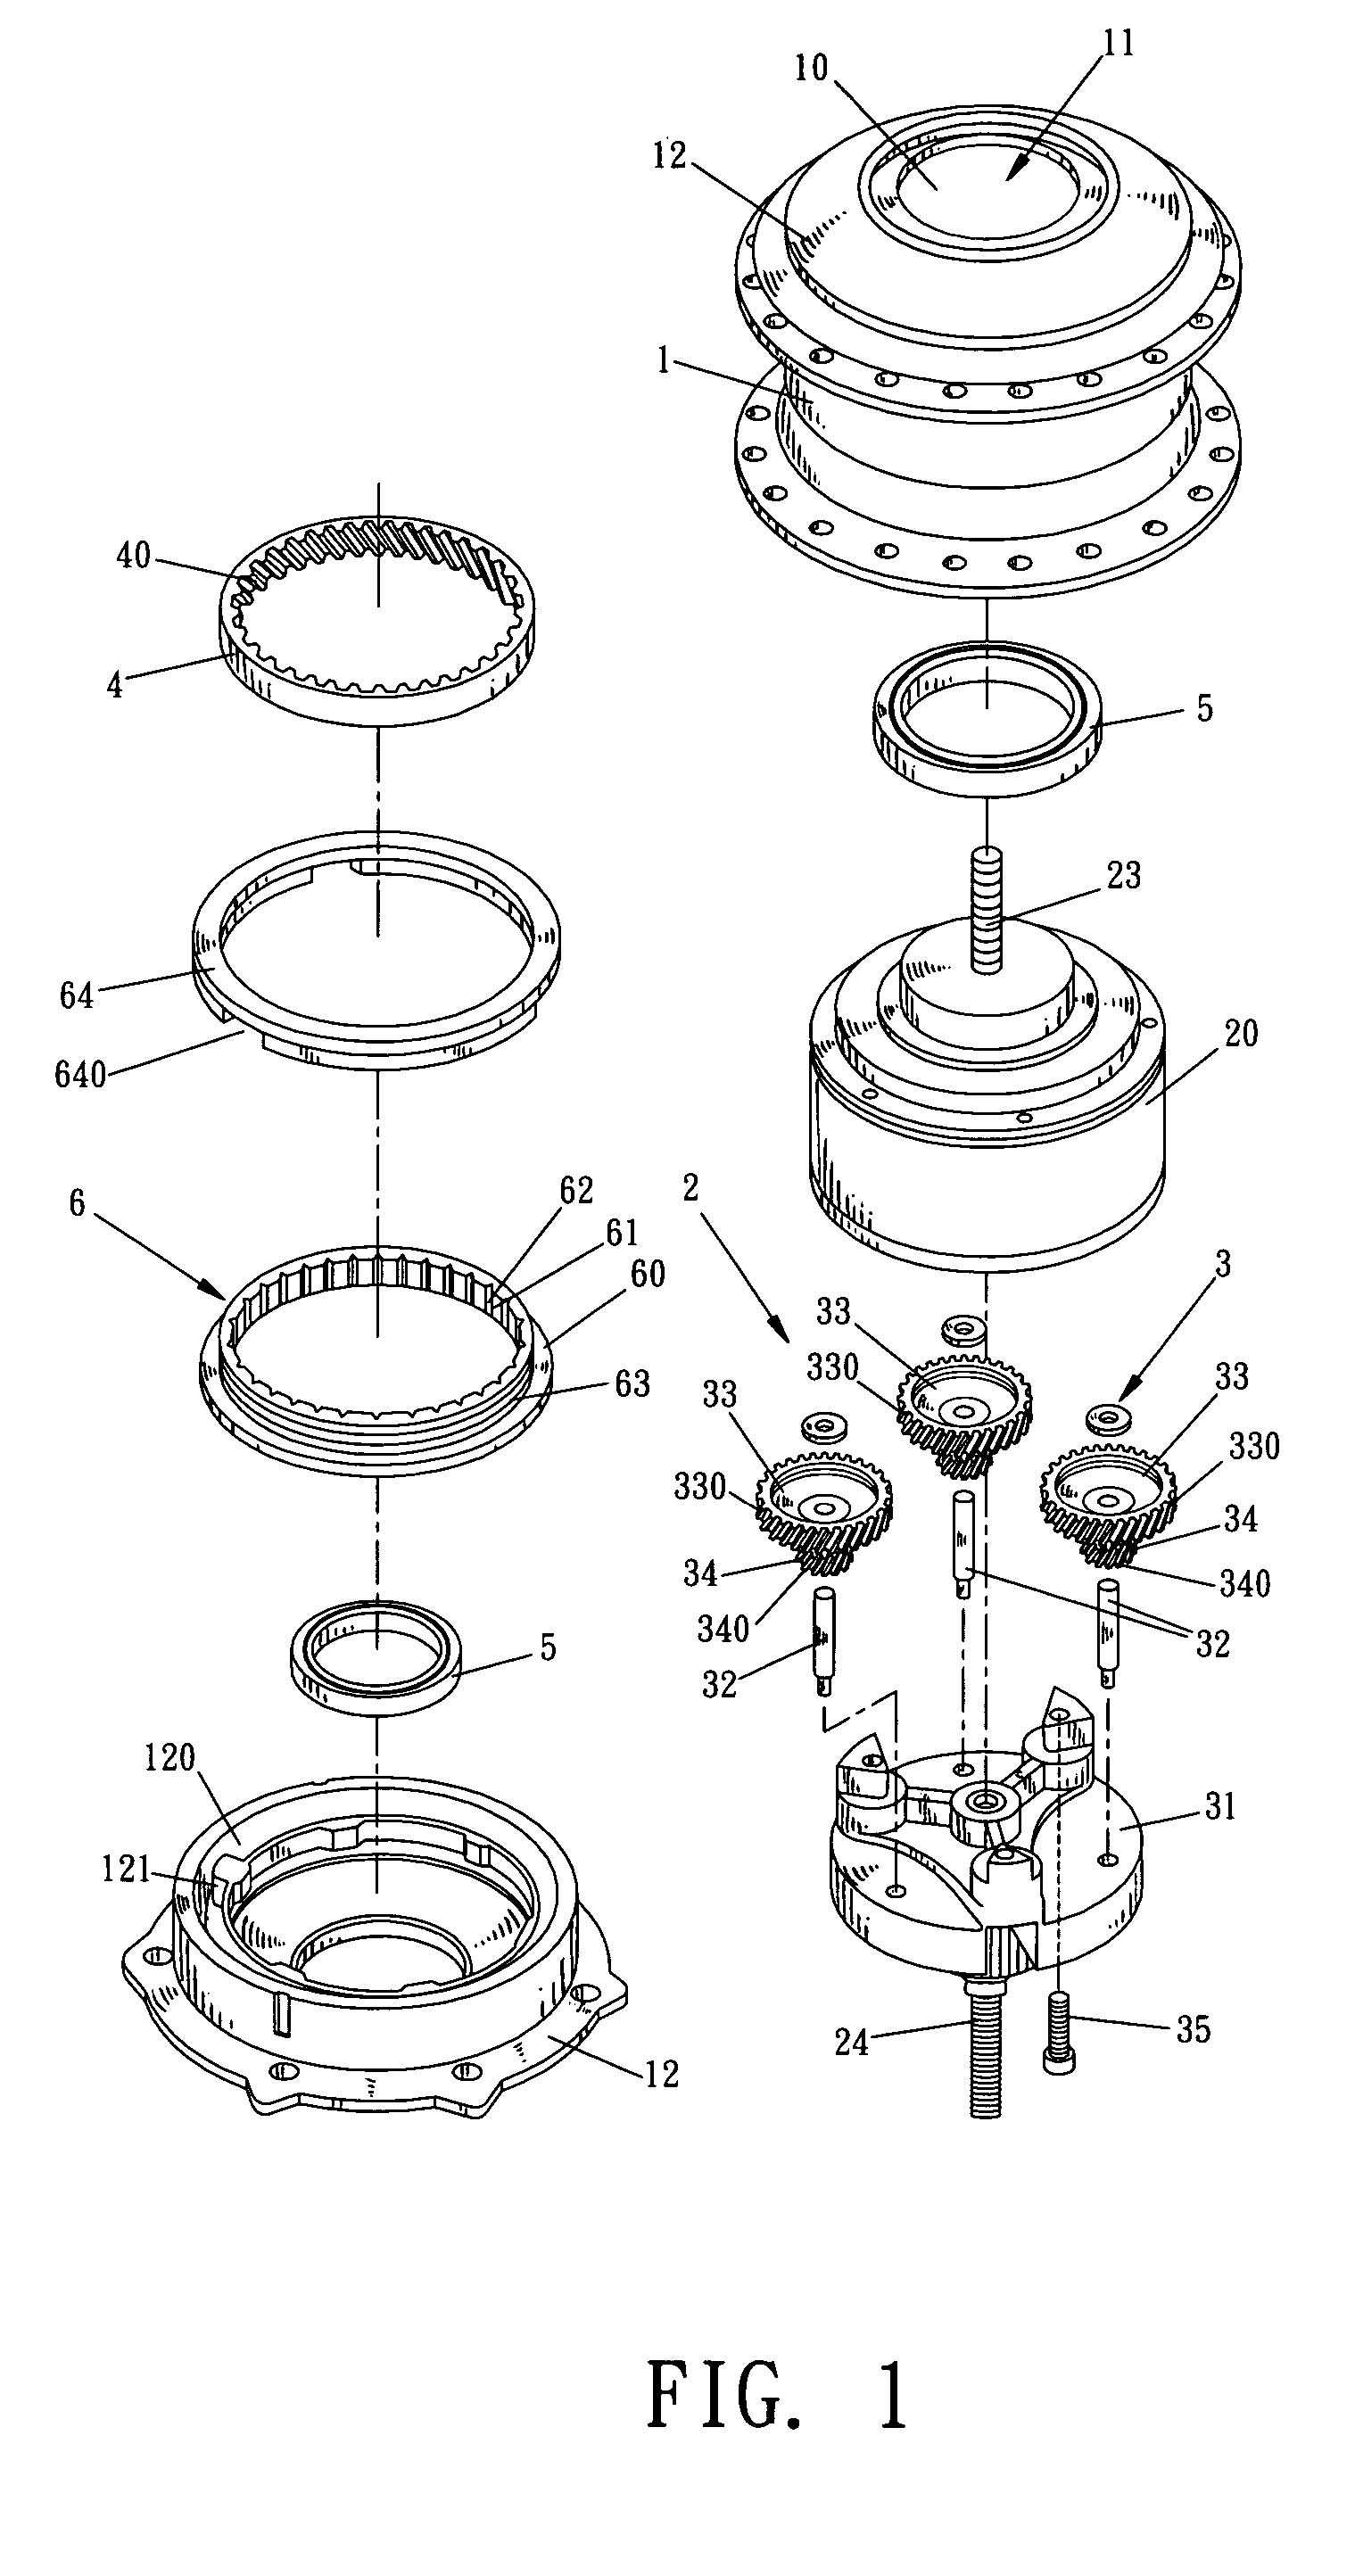 Hub motor mechanism